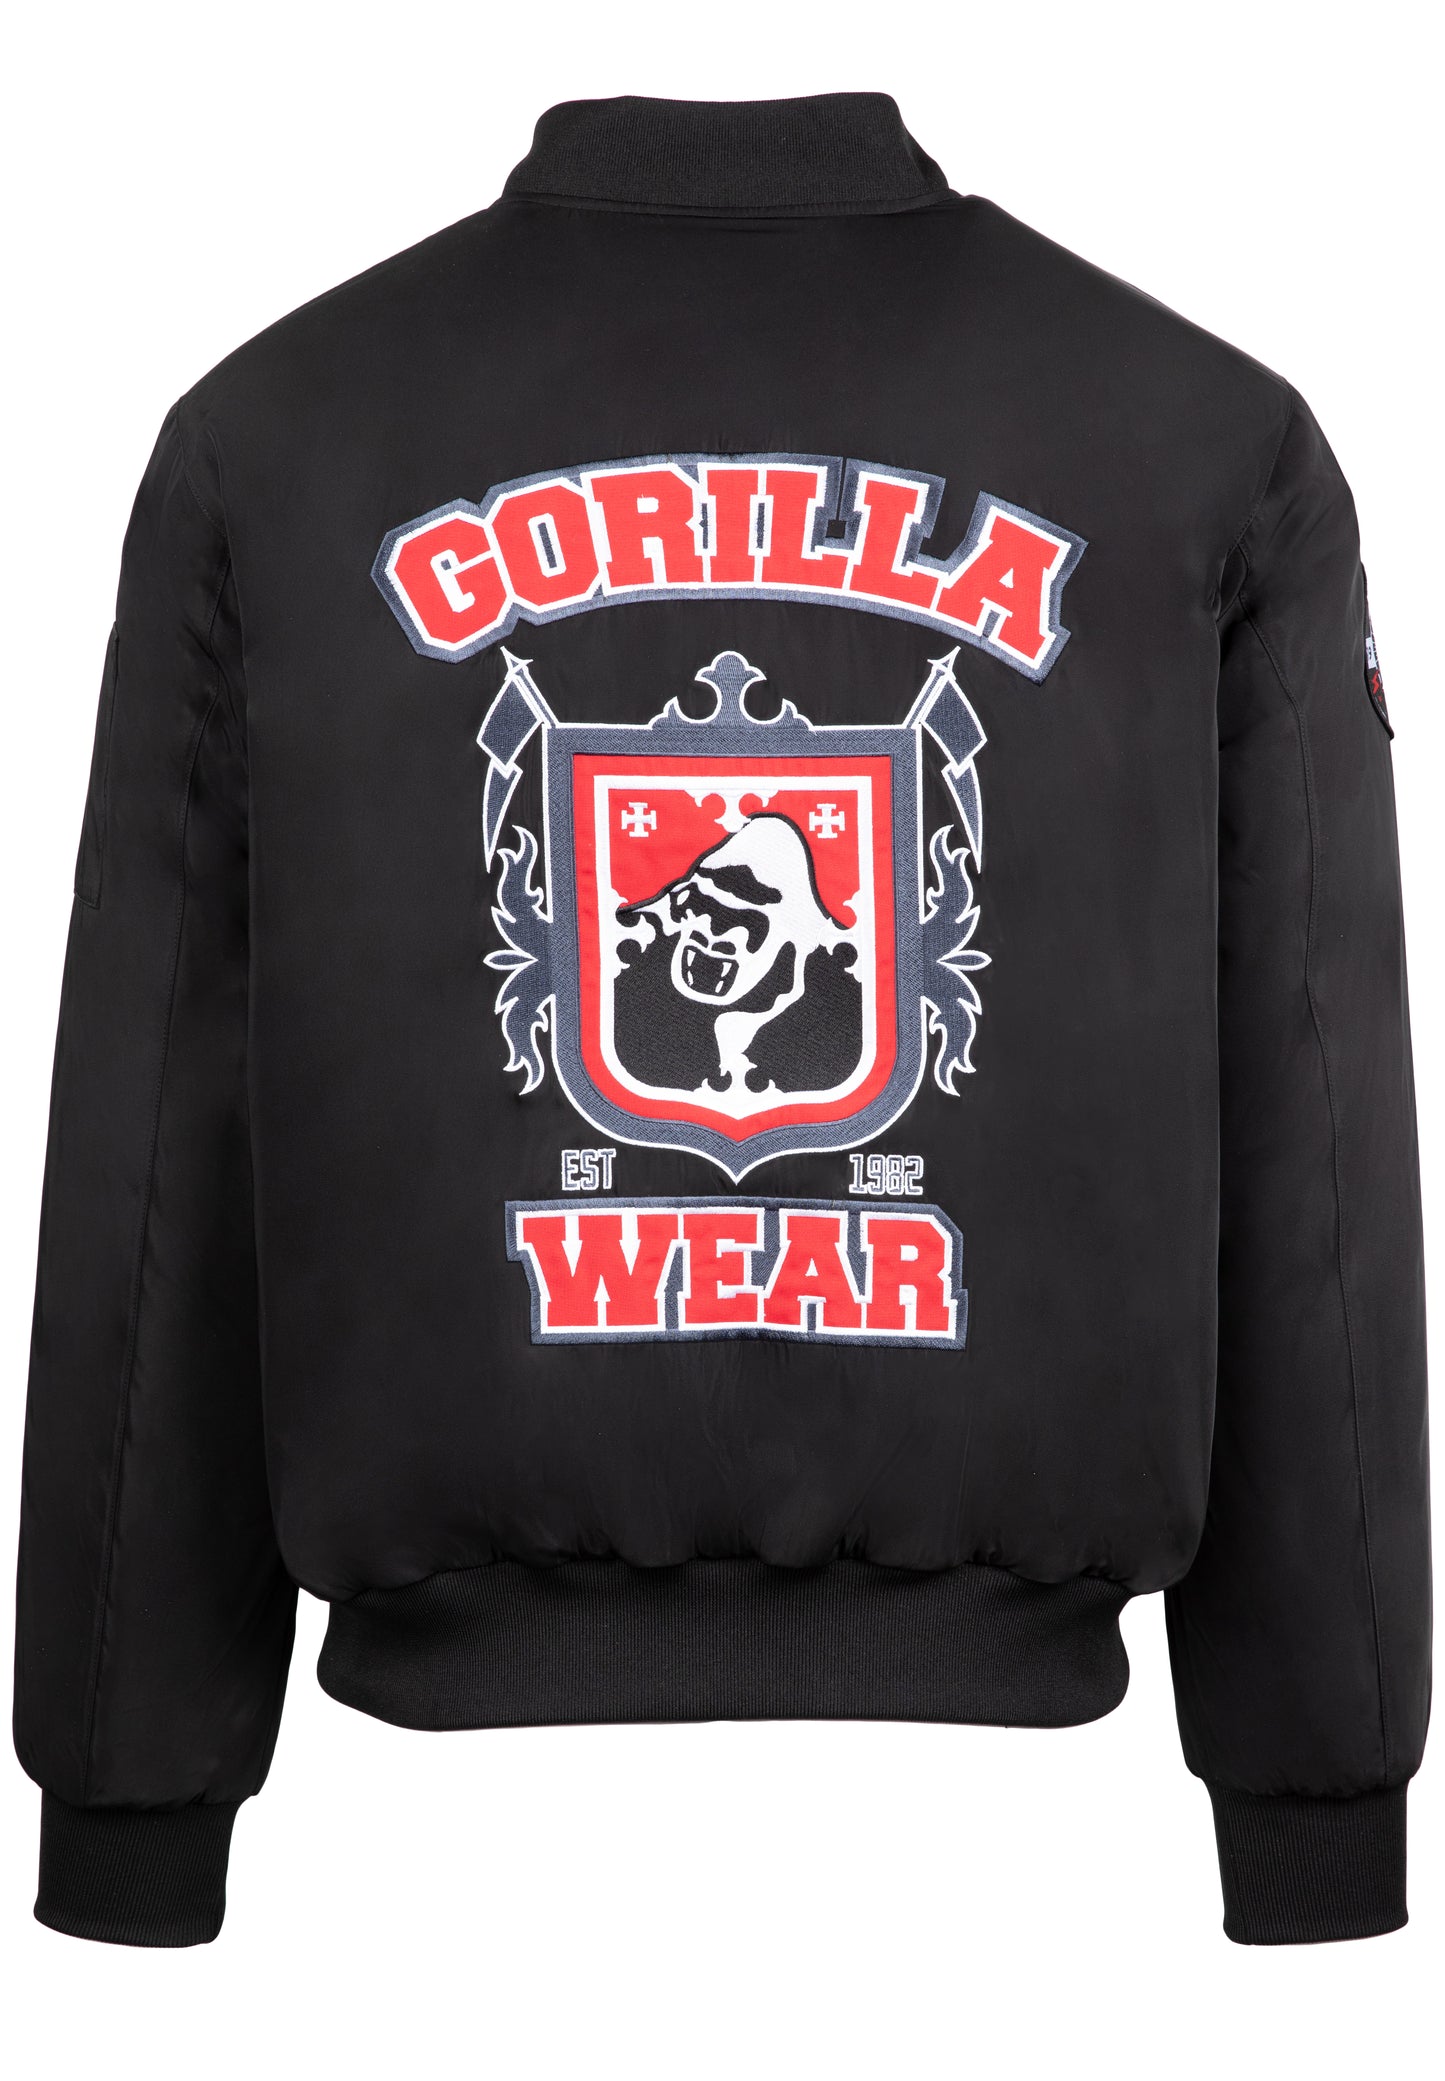 Gorilla Wear Covington Bomber Jacket - Schwarz